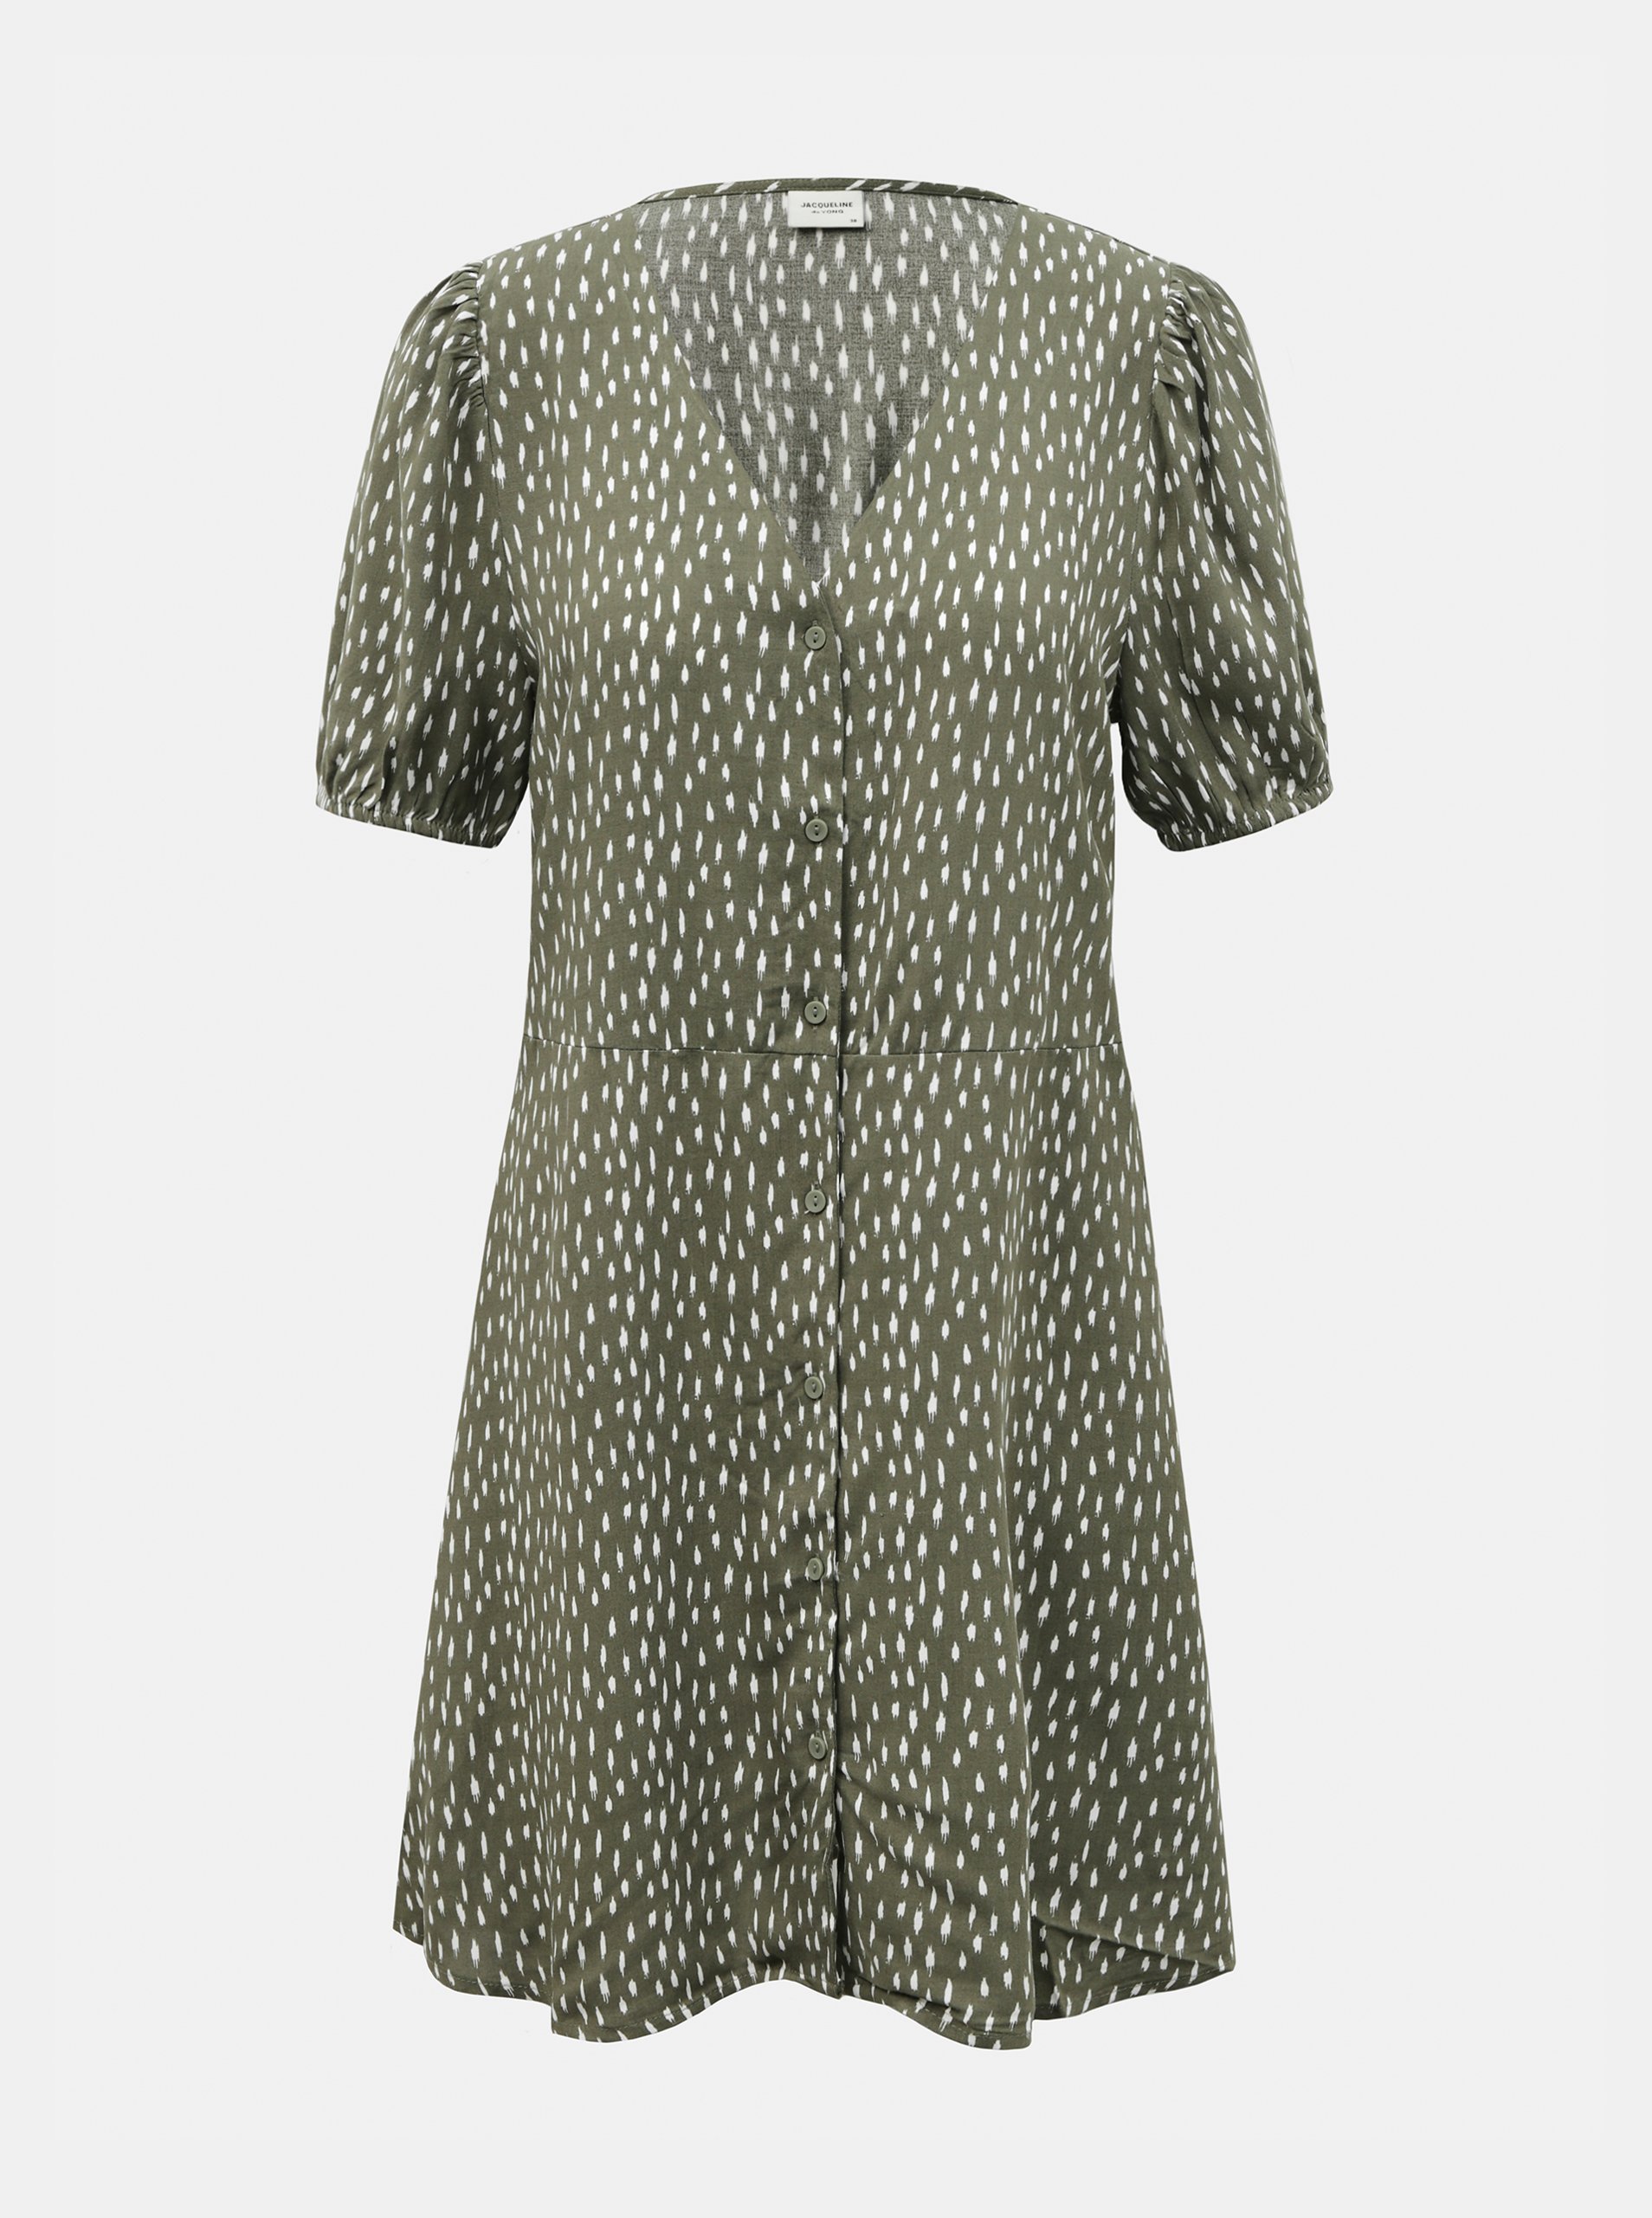 Lacno Zelené vzorované šaty s gombíkmi Jacqueline de Yong Staar